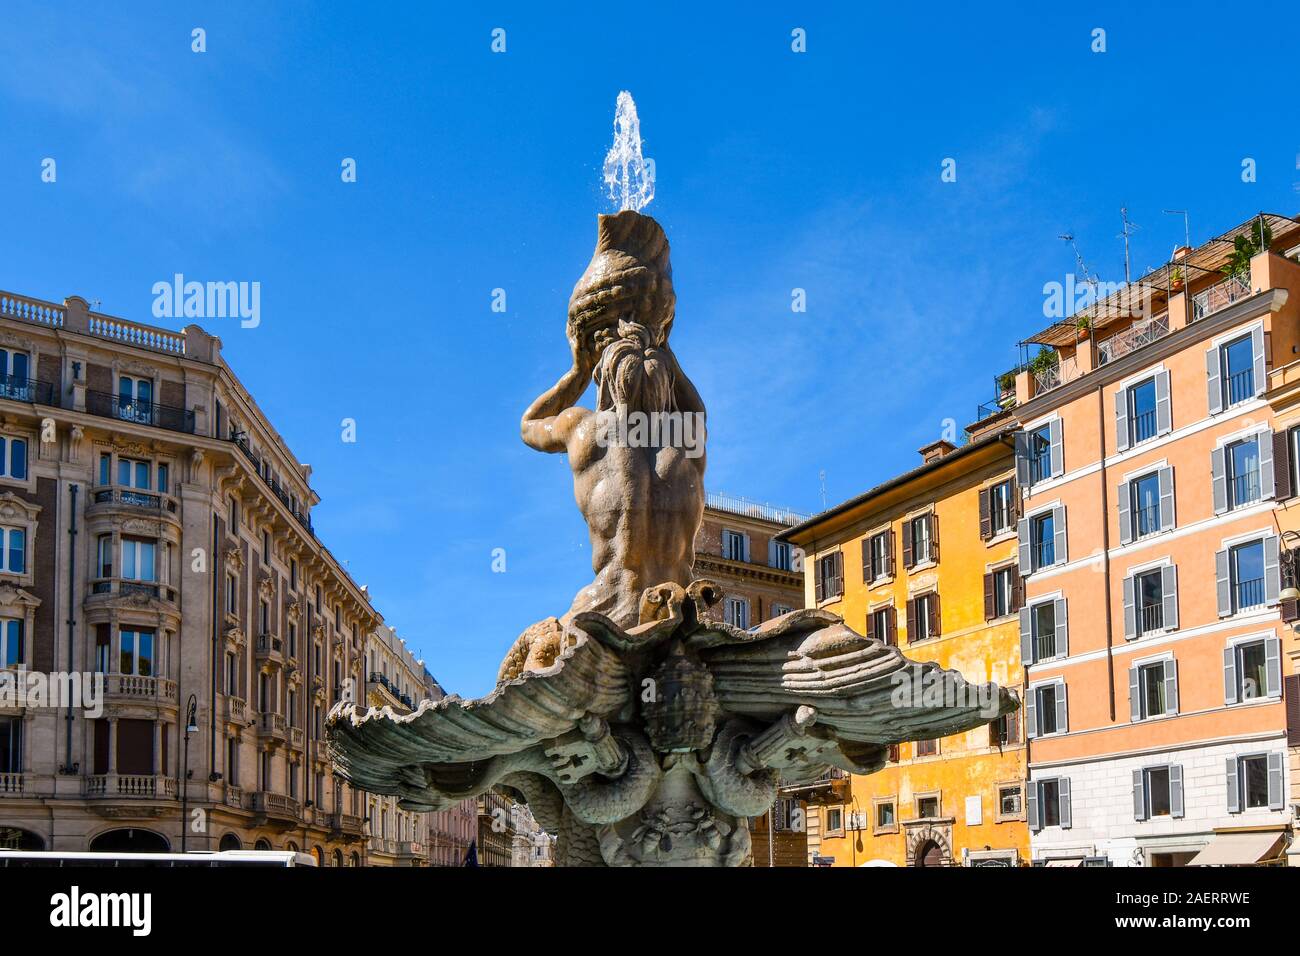 The Triton Fountain in the Piazza Barberini, Rome Italy, representing Triton, half-man and half-fish, blowing his horn to calm the waters Stock Photo